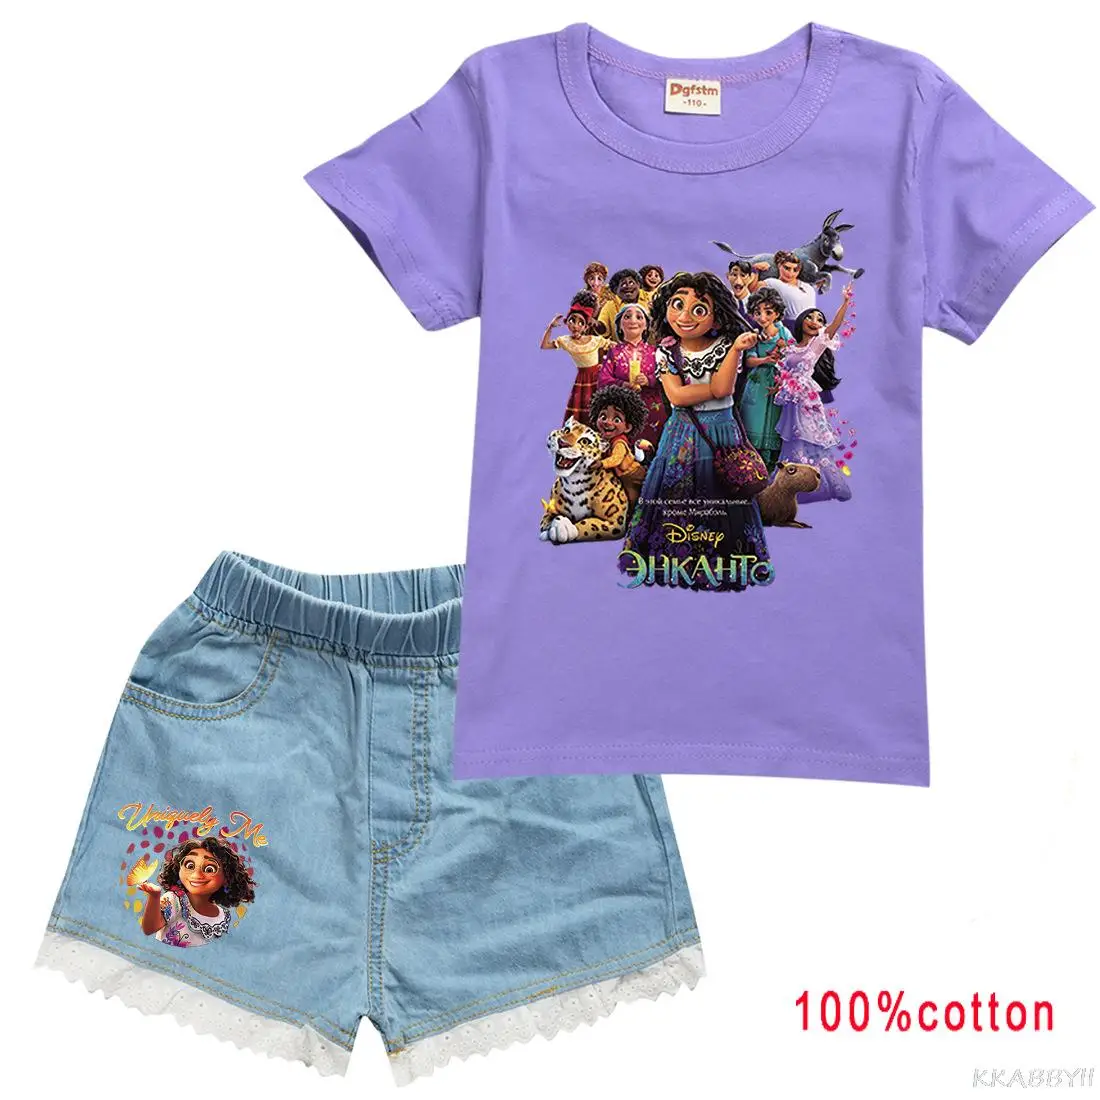 Disney Encanto Fashionable leisure summer hot selling girl children's wear short sleeves cartoon T shirt jeans|Clothing Sets| - AliExpress